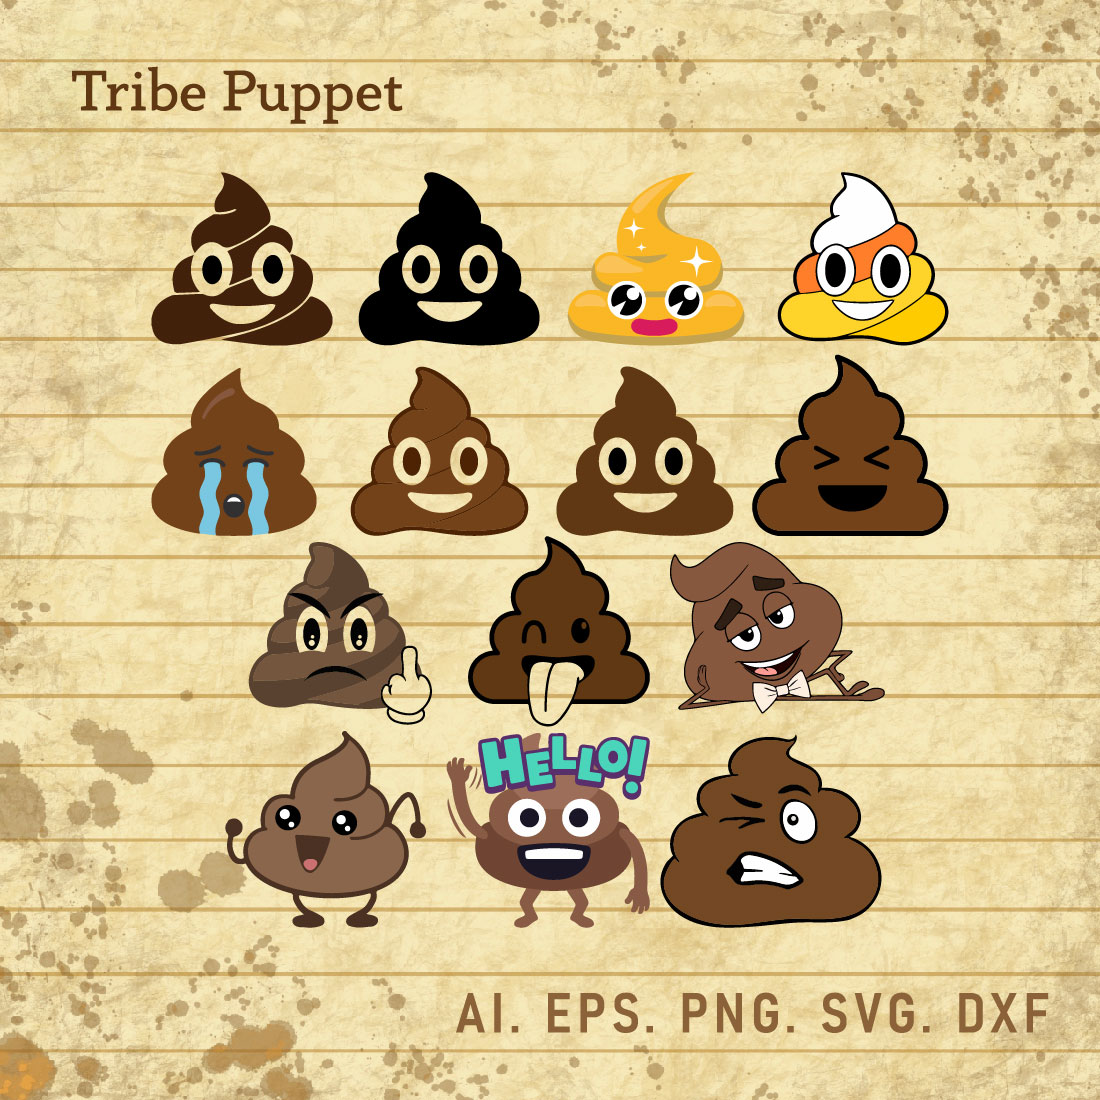 Poop Emoji SVG cover image.